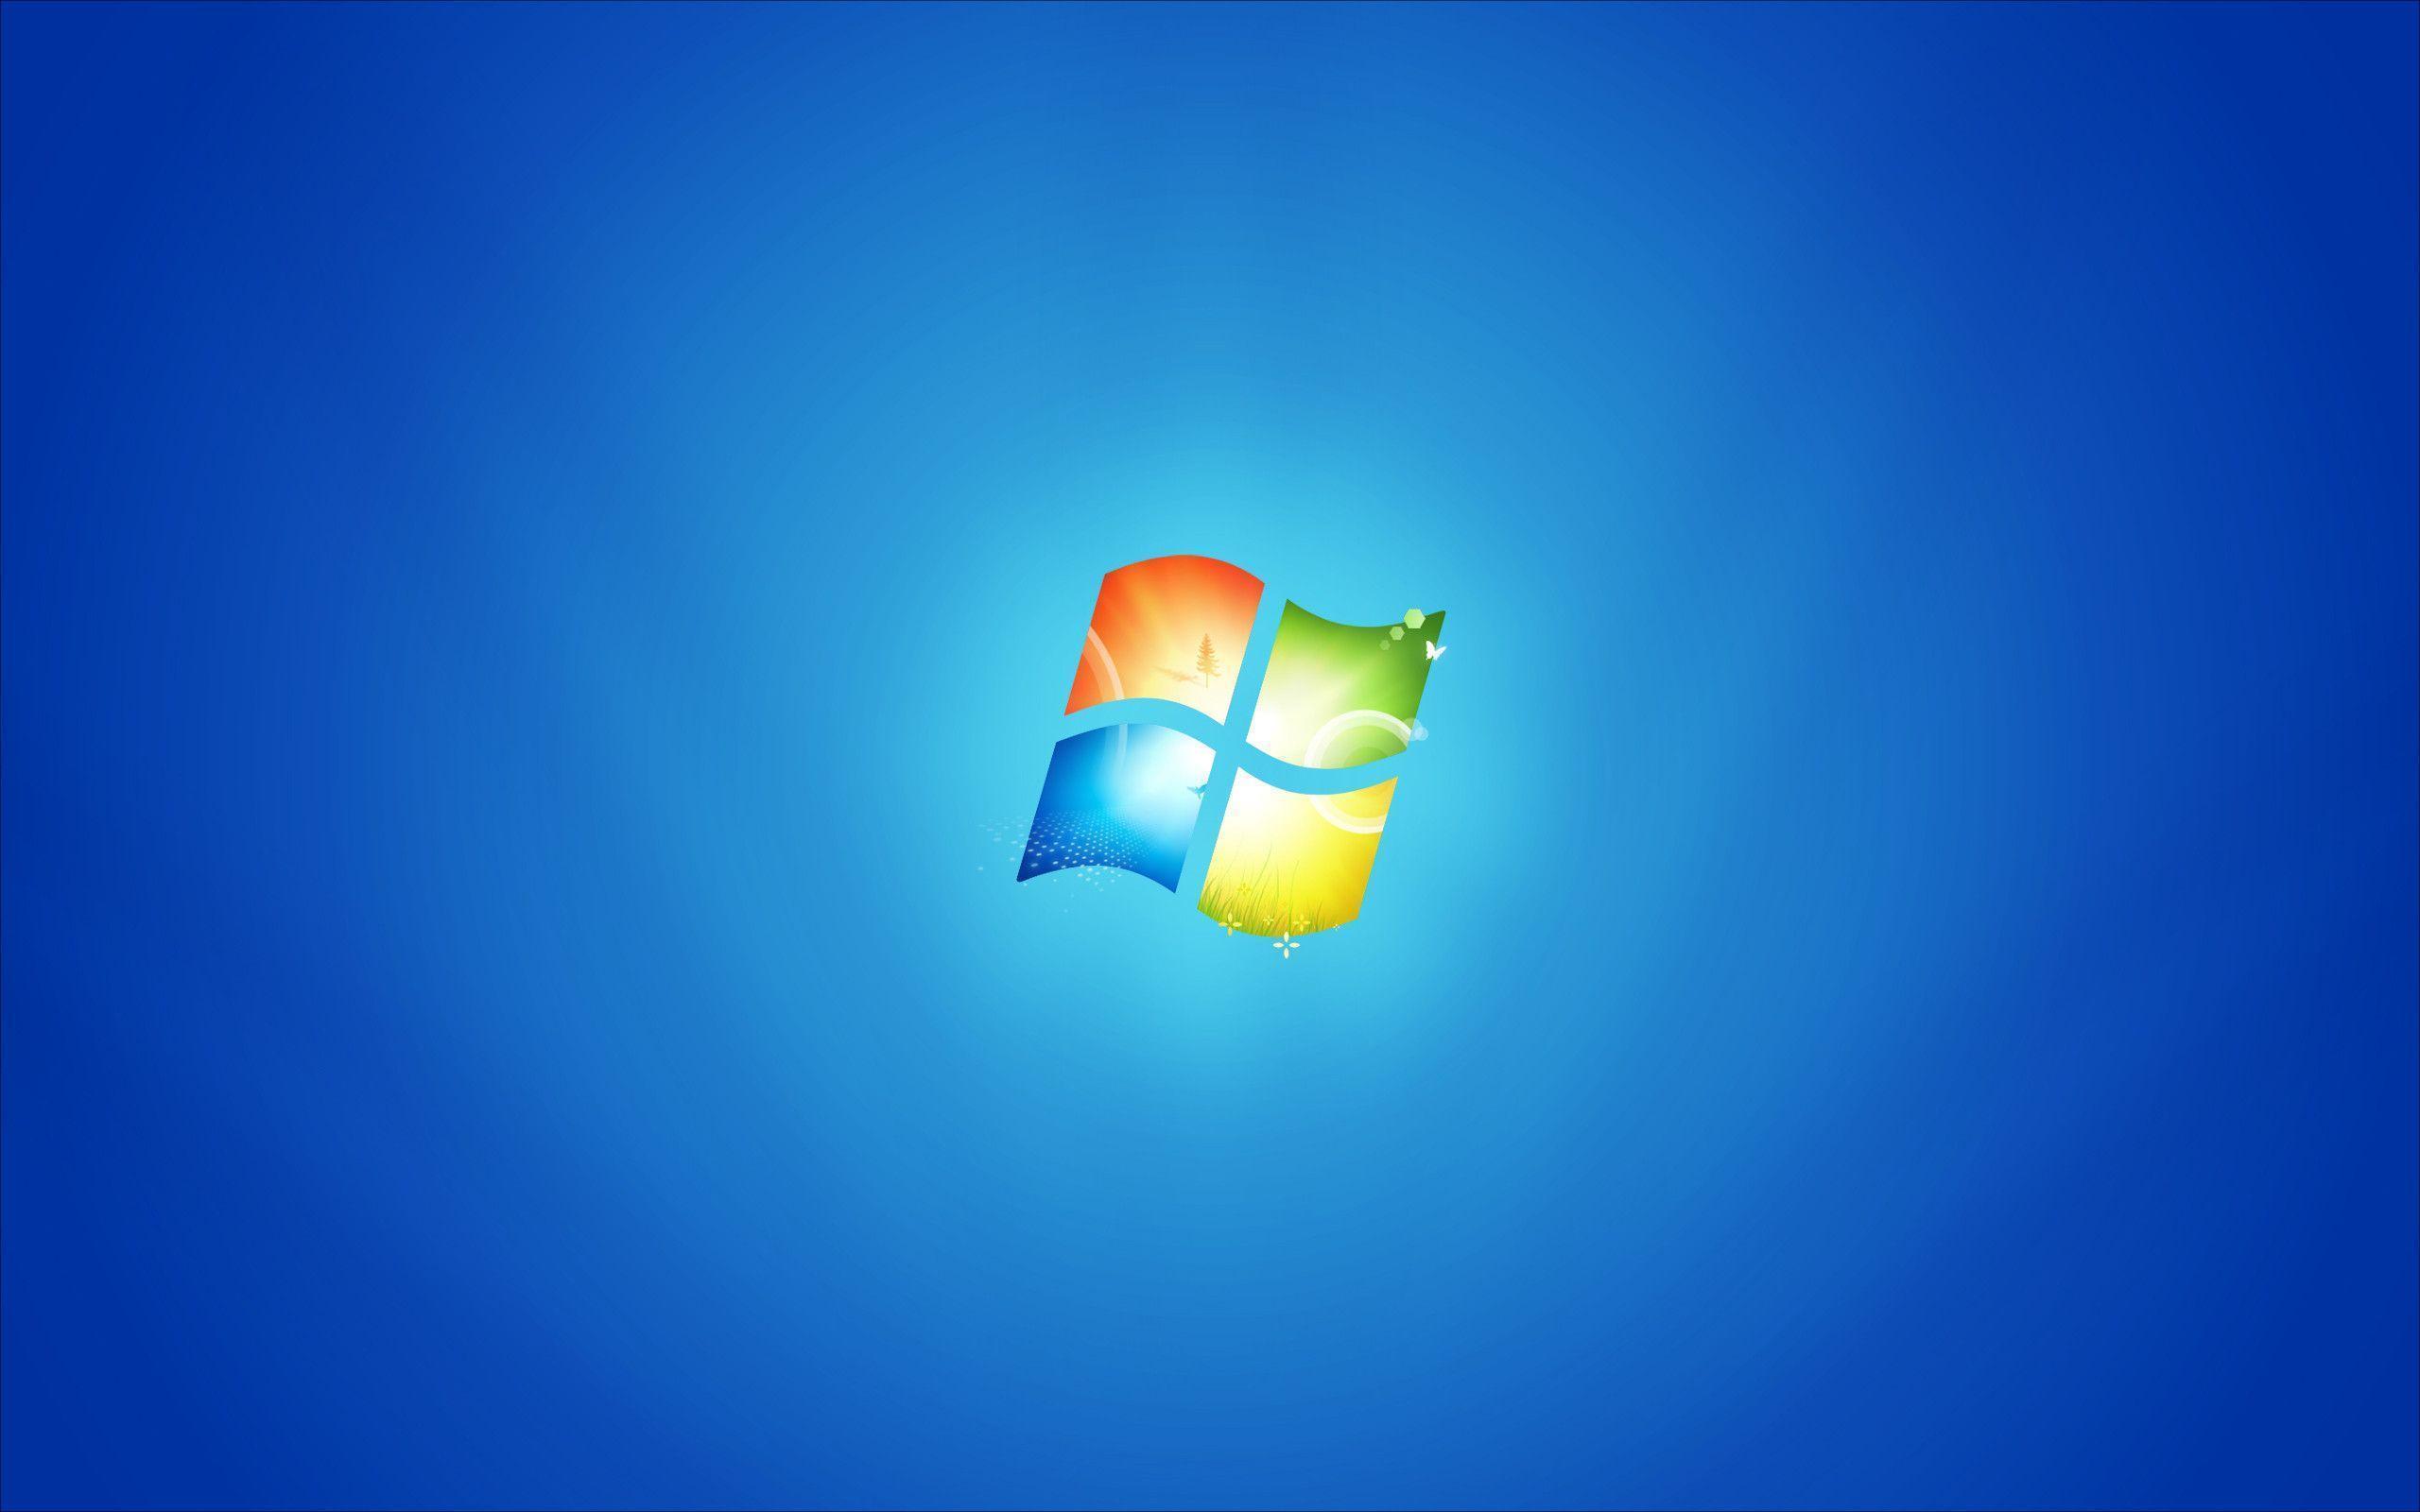 Windows Desktop Wallpaper